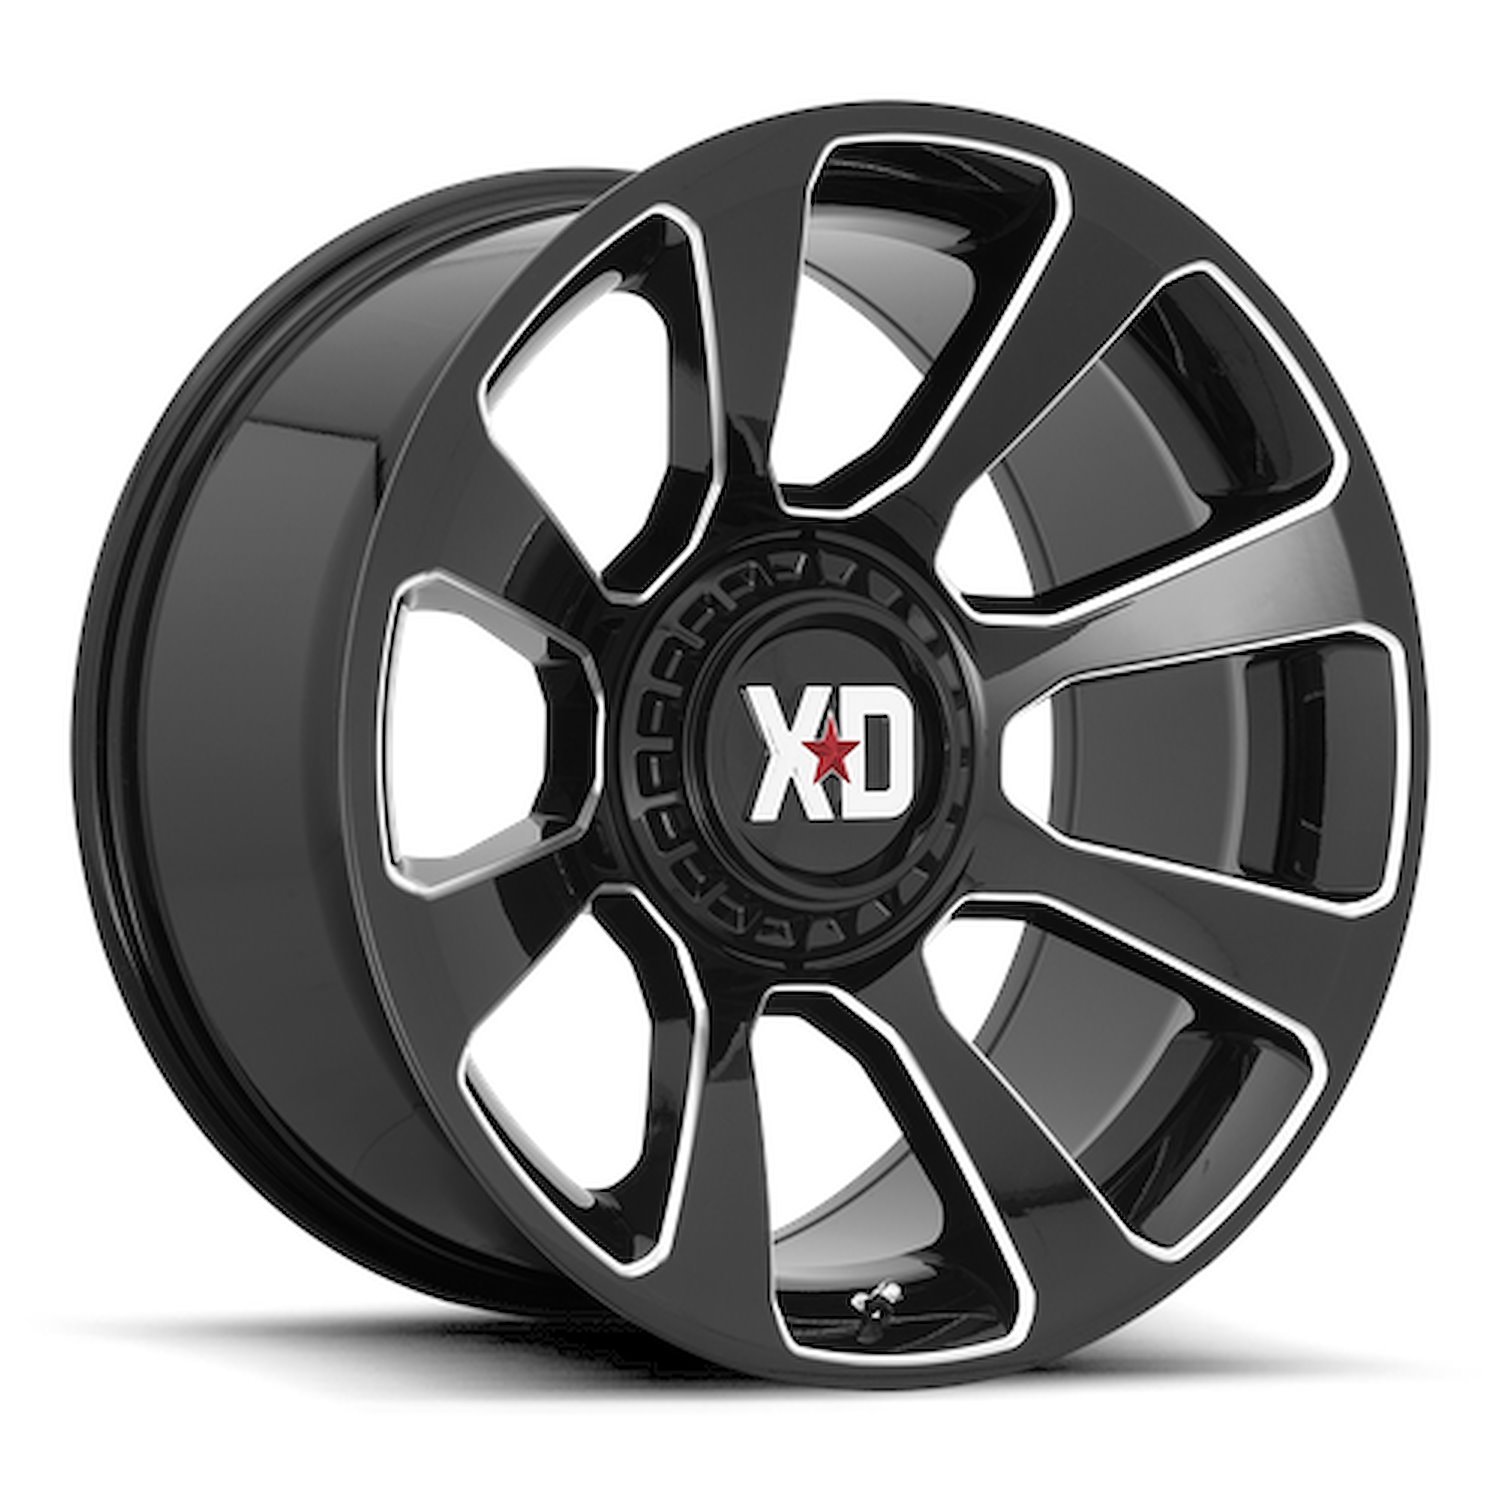 XD Wheels XD854 Reactor Wheel [Size: 20" x 9"] Gloss Black w/ Milled Accents